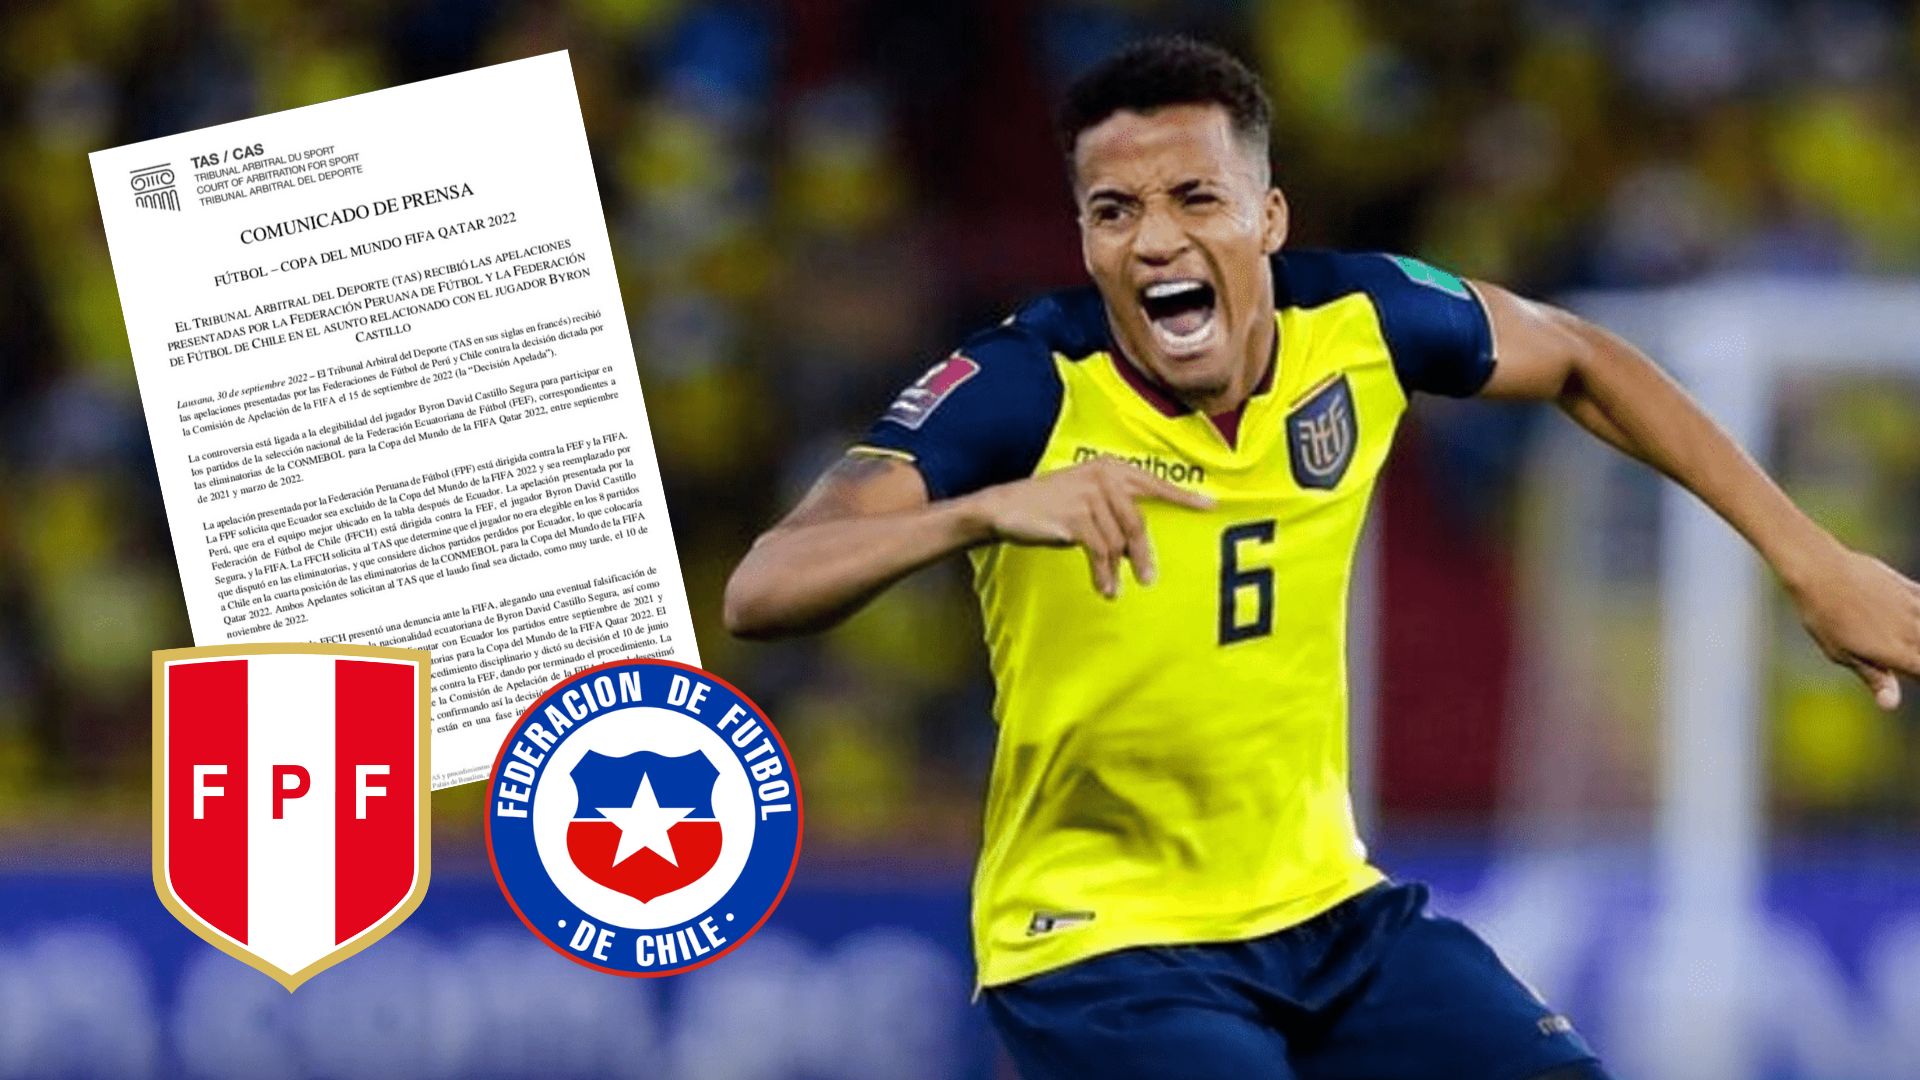 El abogado del futbolista Byron Castillo anunció millonaria demanda contra Chile: “Les va a salir caro” - Infobae